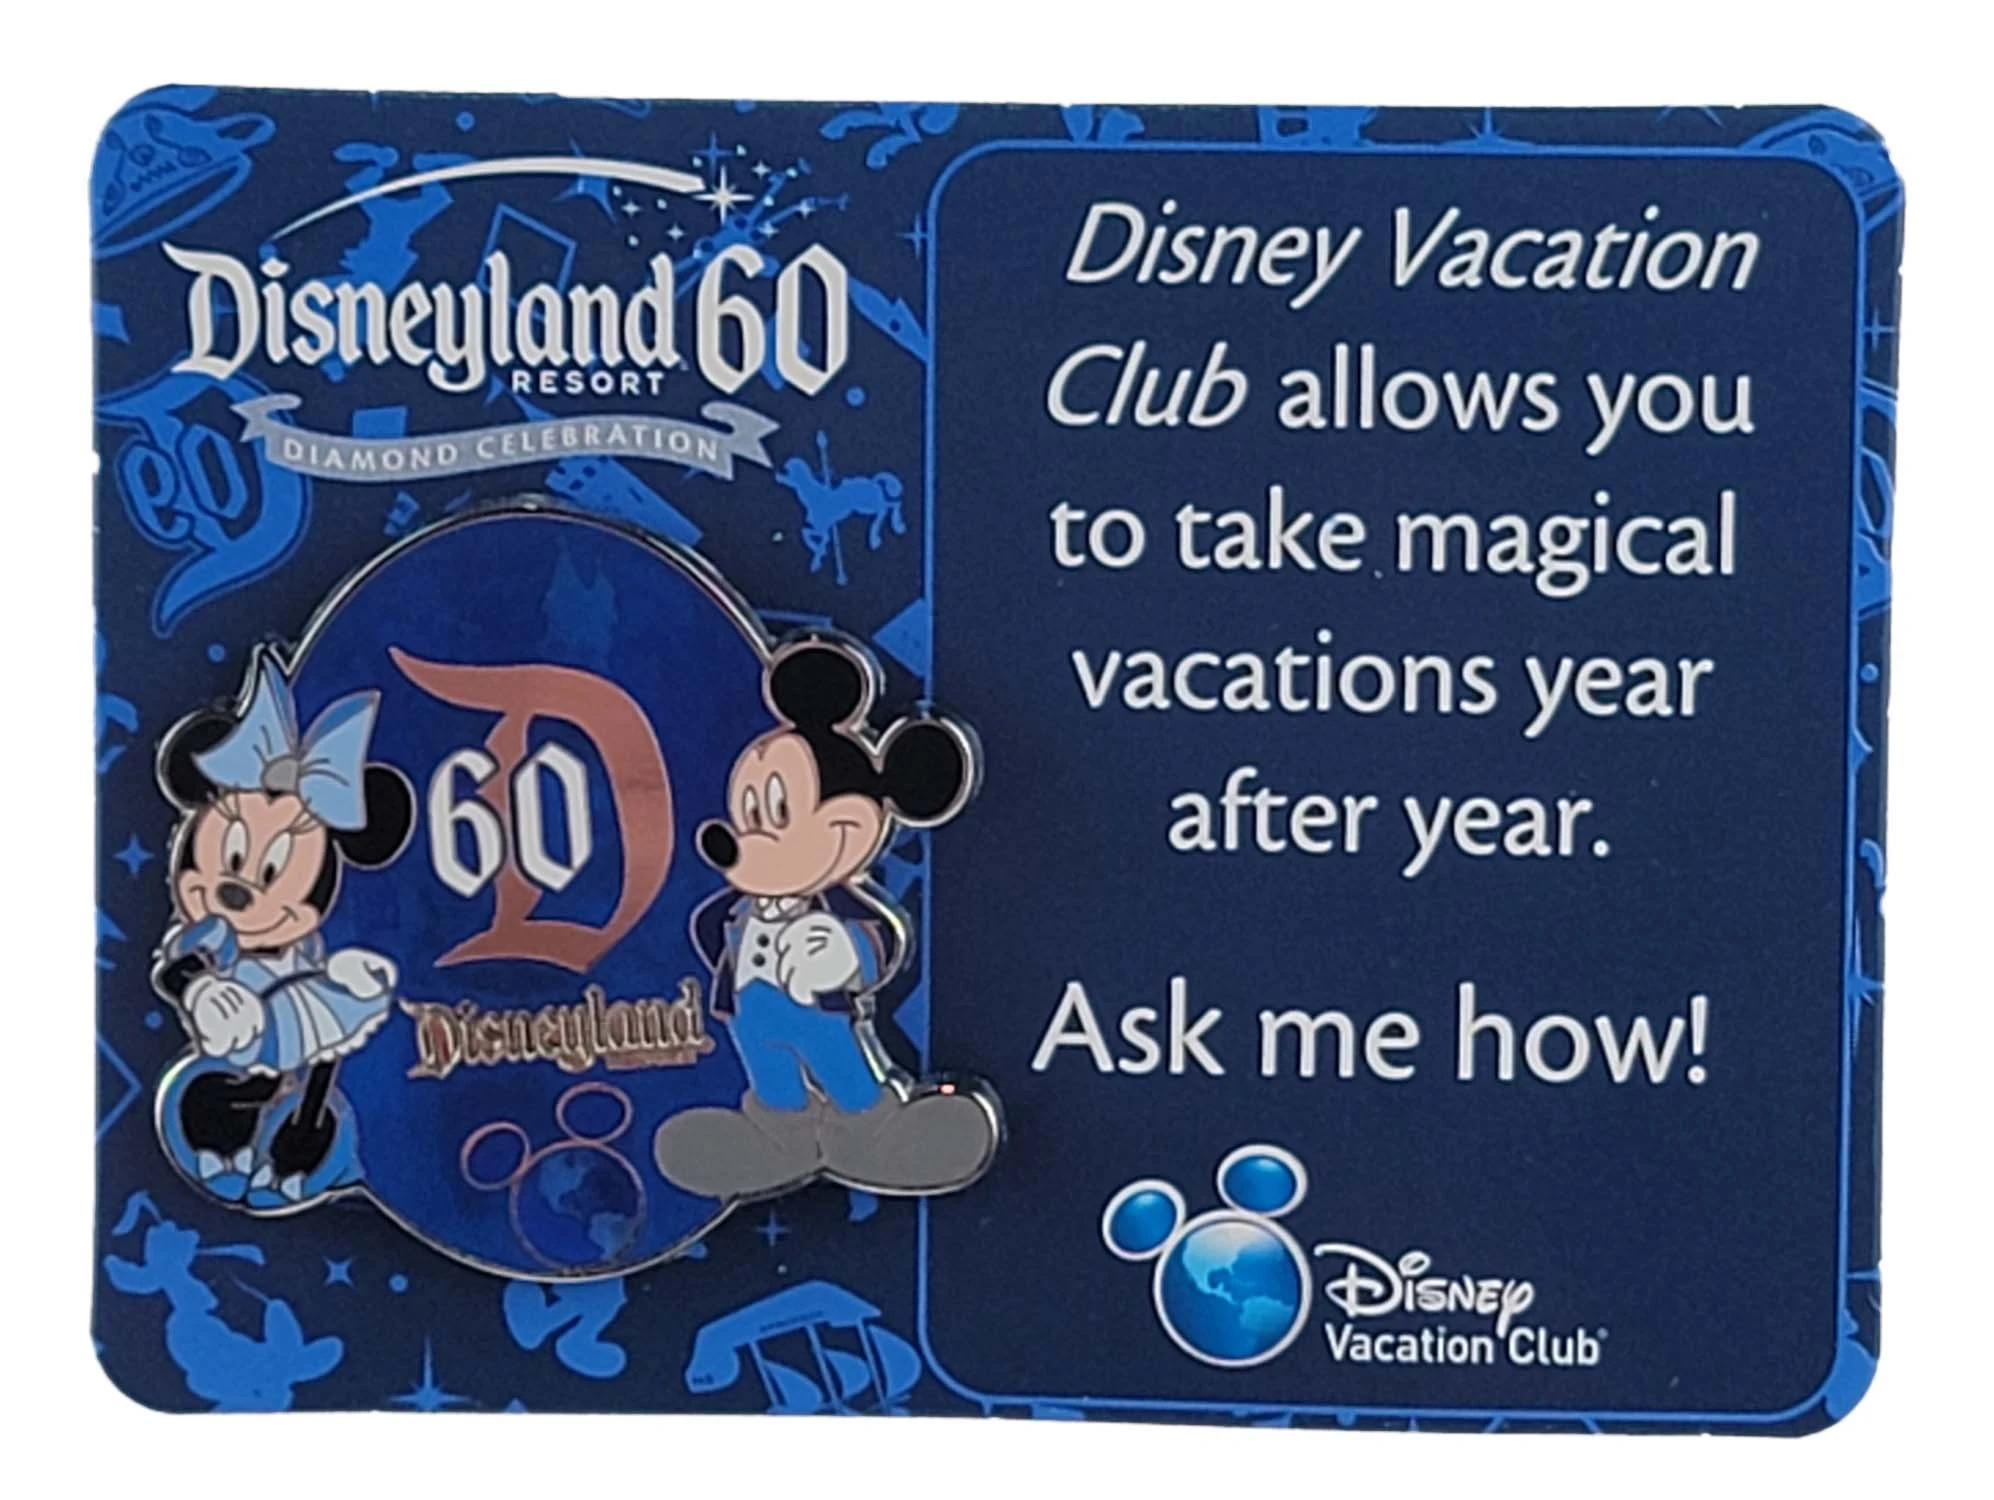 item Disney Pin - Disneyland Resort - DLR - 60th Anniversary - Mickey and Minnie Mouse - Disney Vacation Club Promotion 112180